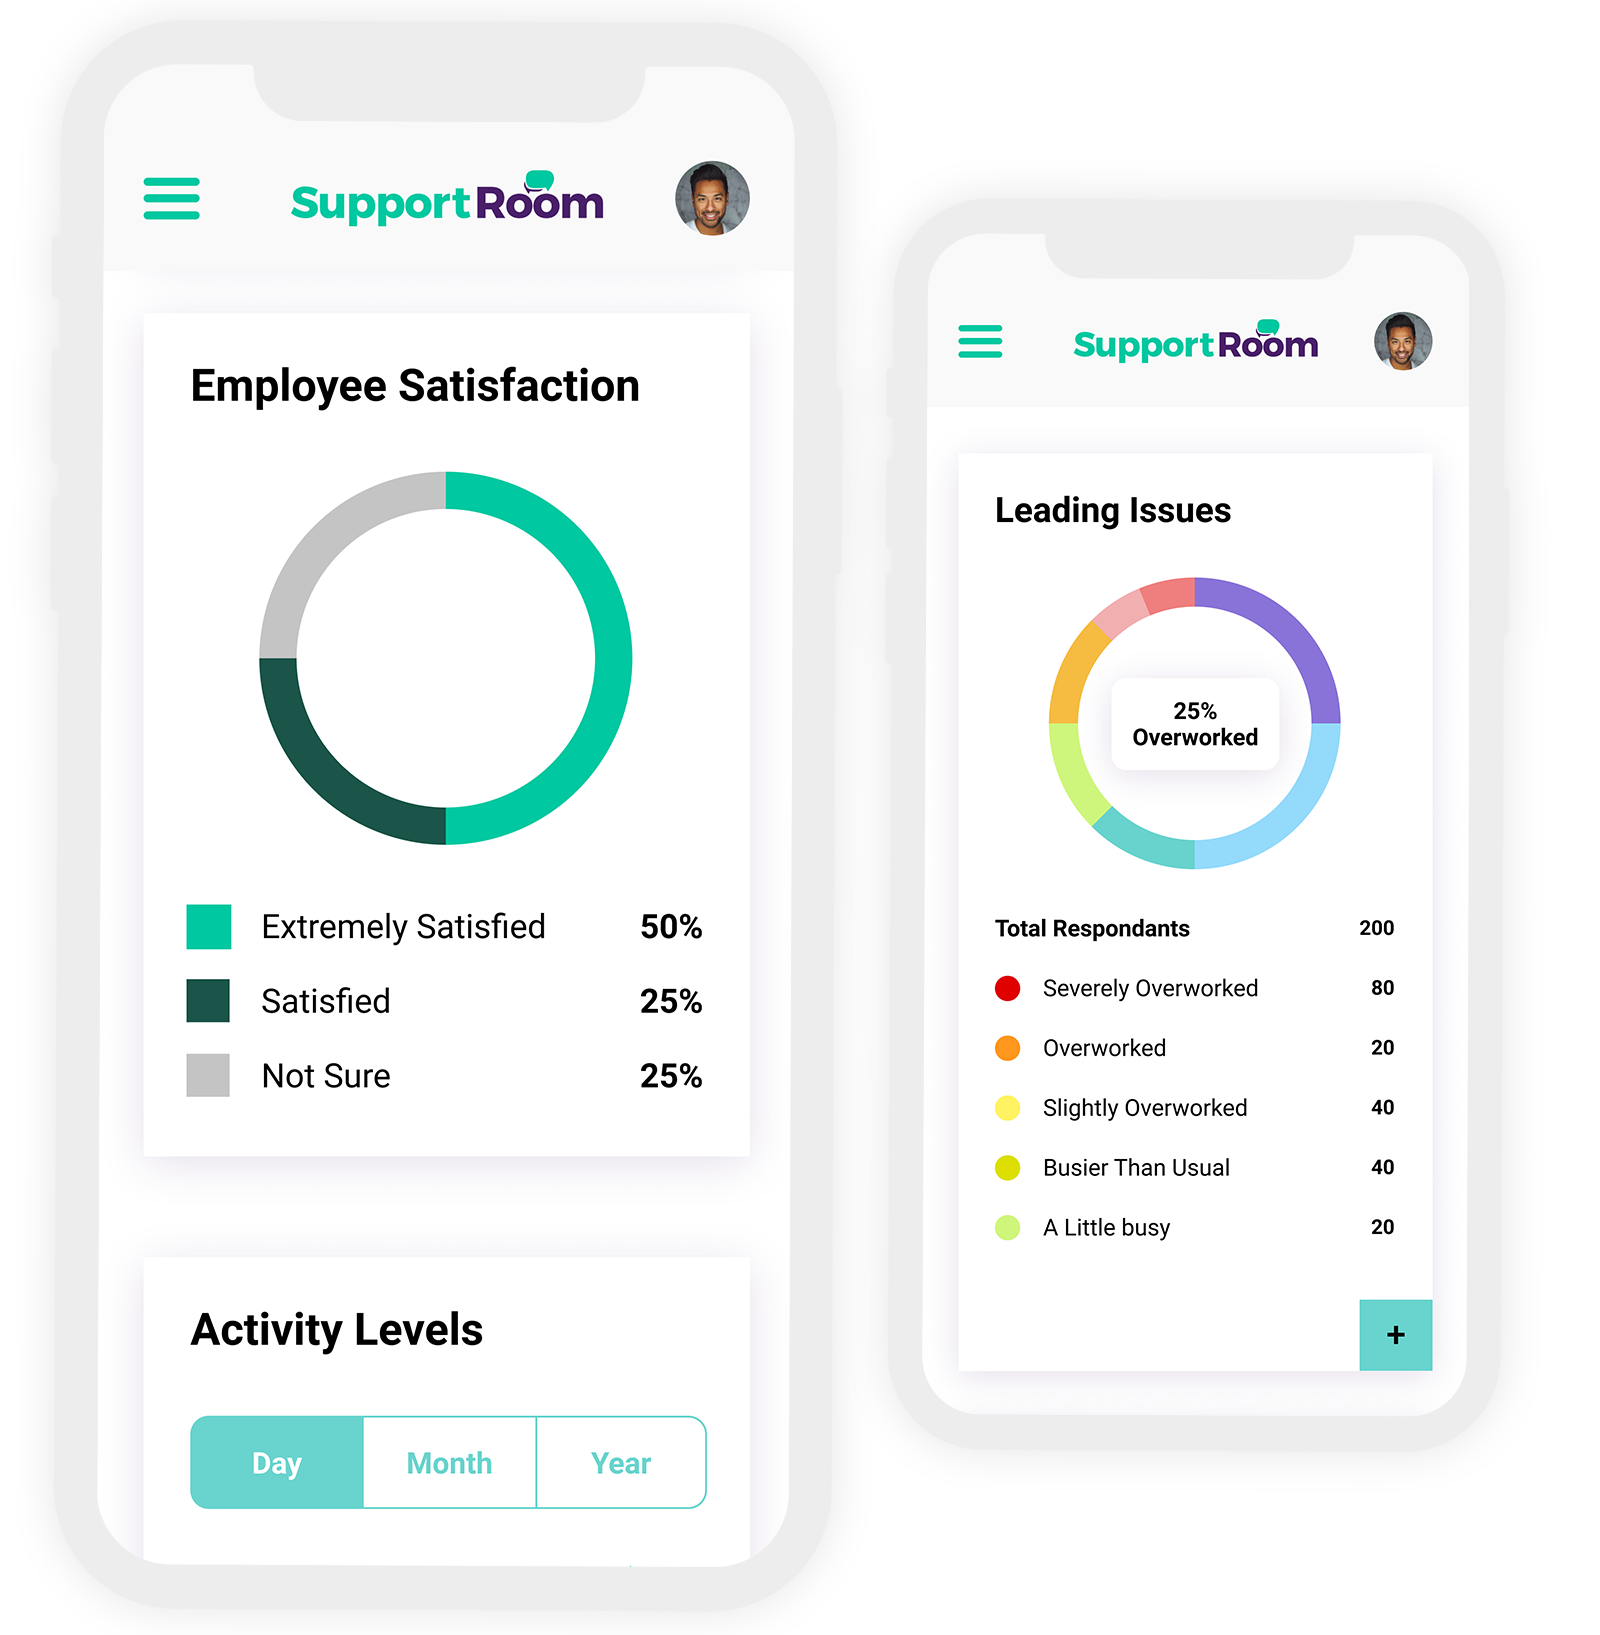 Support Room Employee satisfaction data